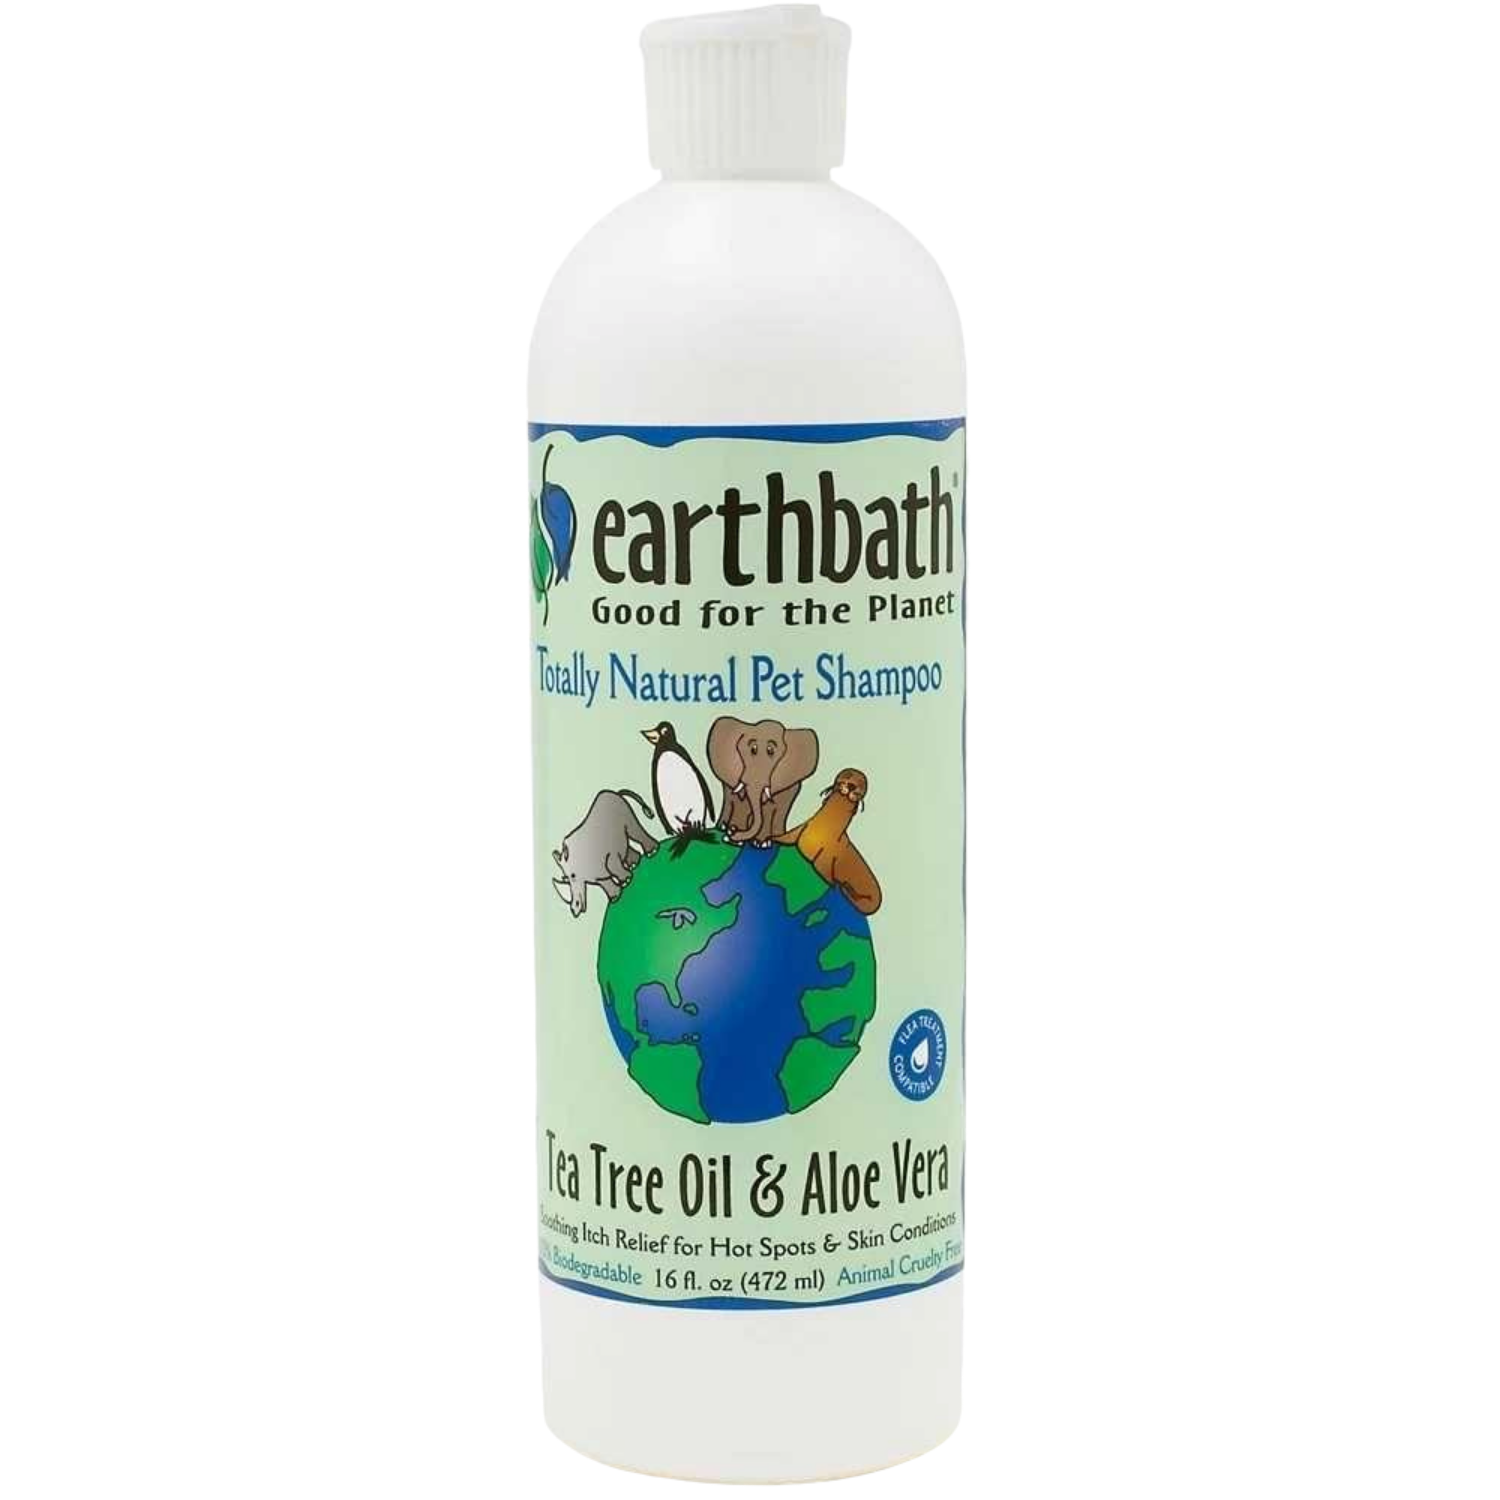 Earthbath Hot Spot Relief Shampoo (Tea Tree Oil & Aloe Vera) - 472ml / 3785ml